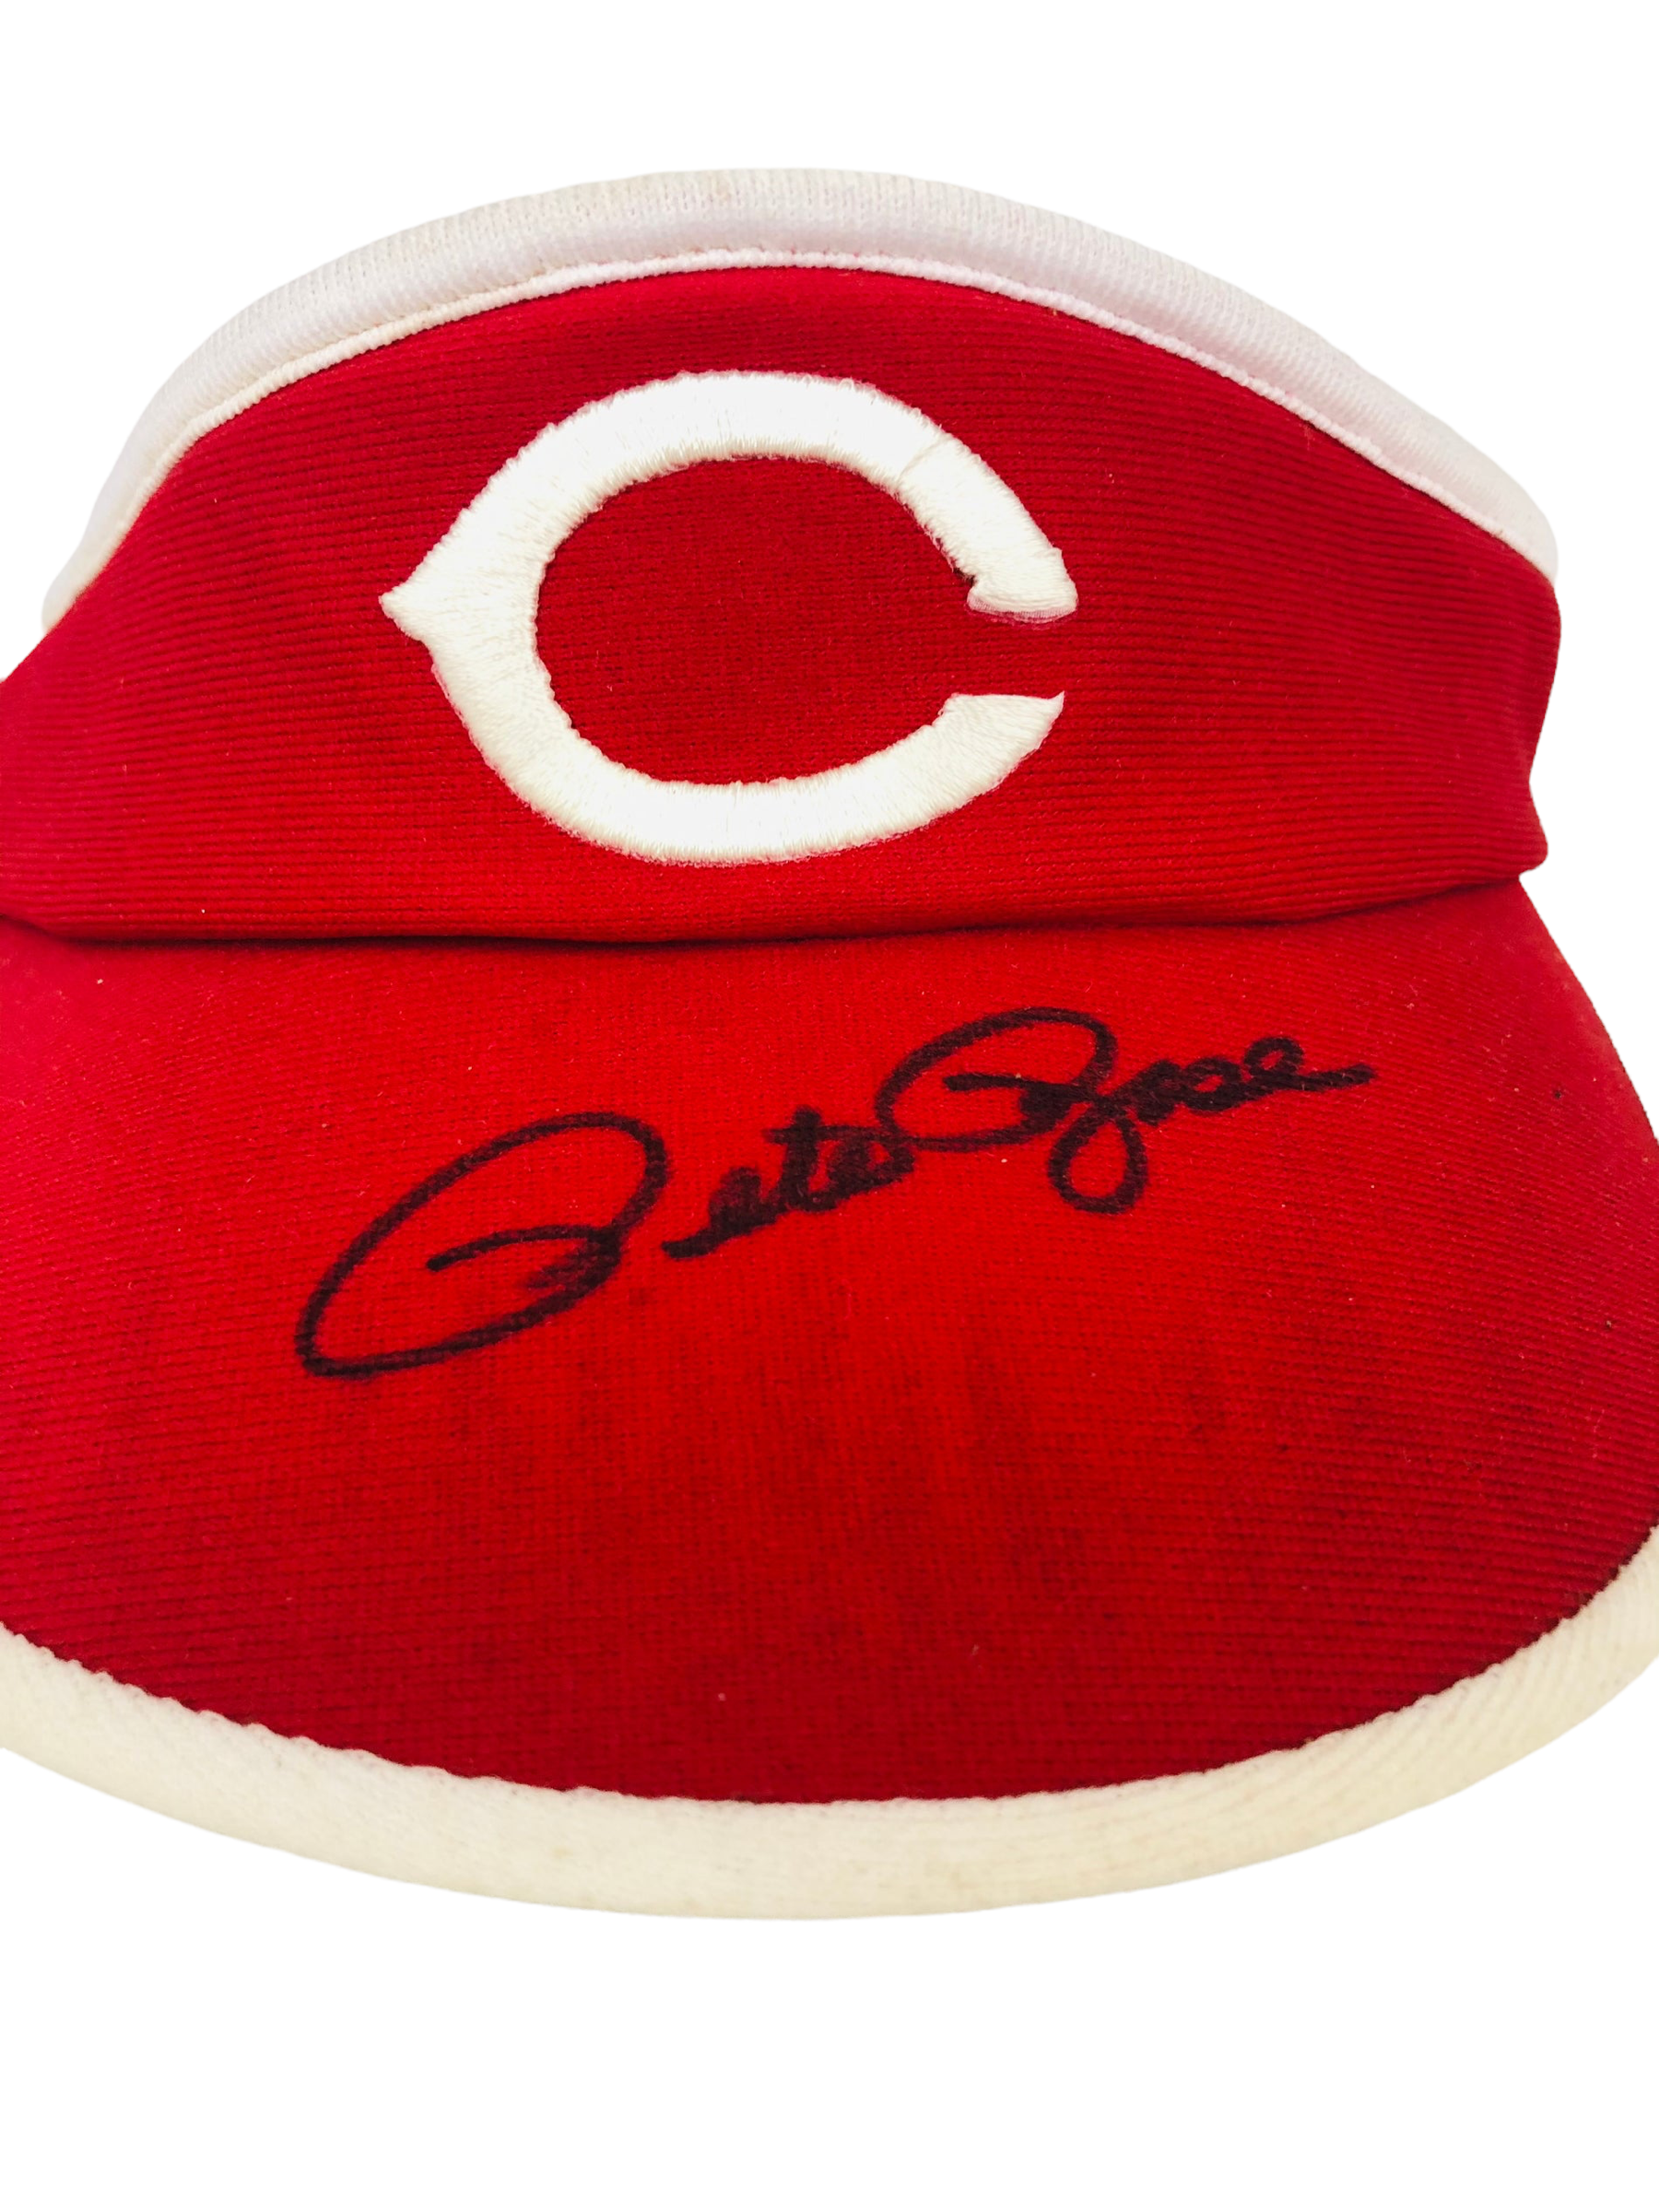 Cincinnati Reds Pete Rose Baseball MLB Original Autographed Photos for sale